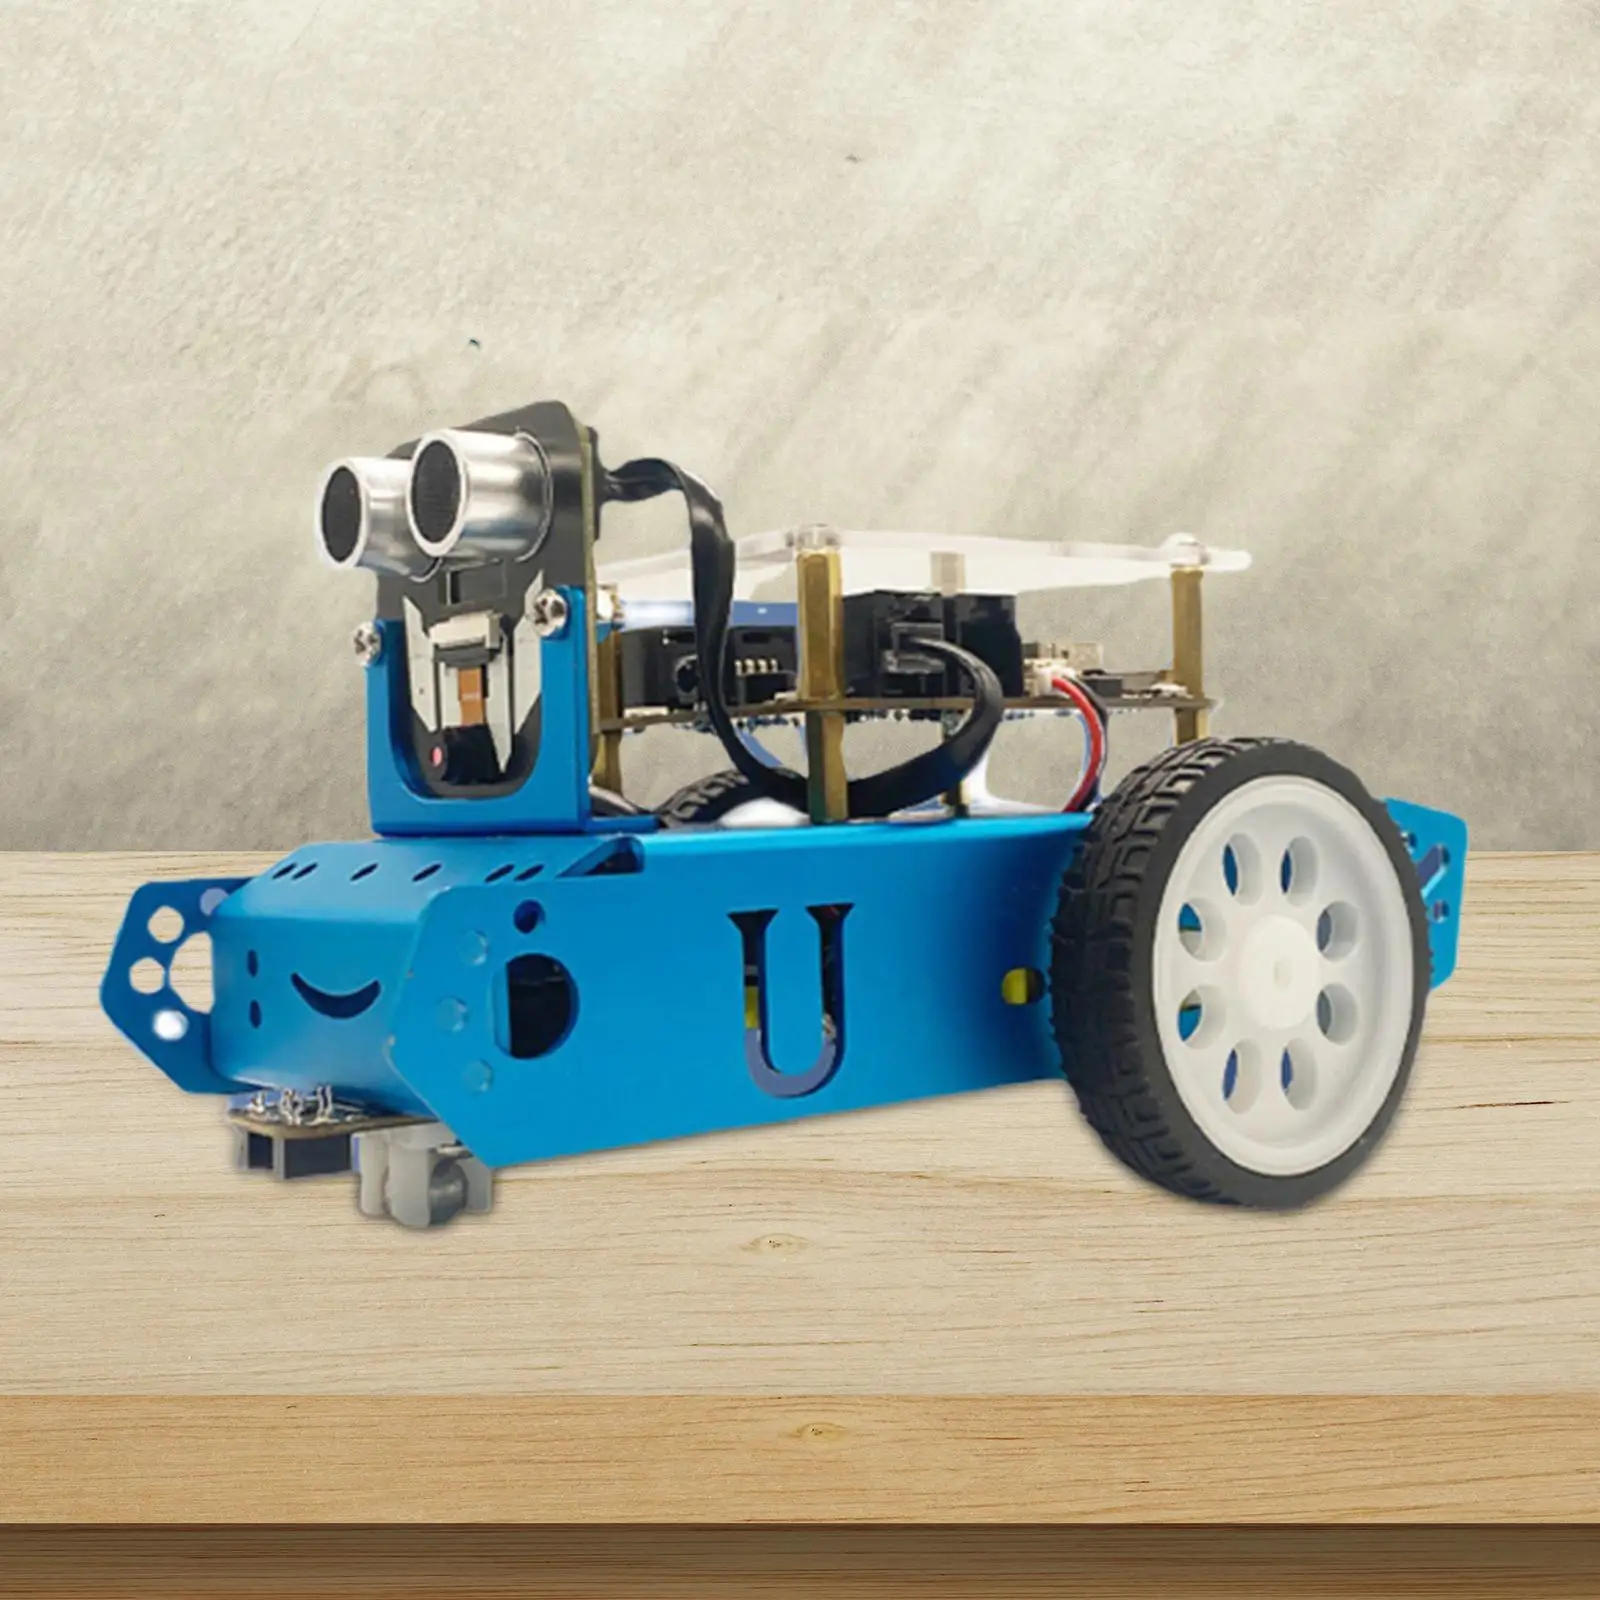 Stem Robot Kits Diy Car Kits for Concentration Thinking Birthday Gifts